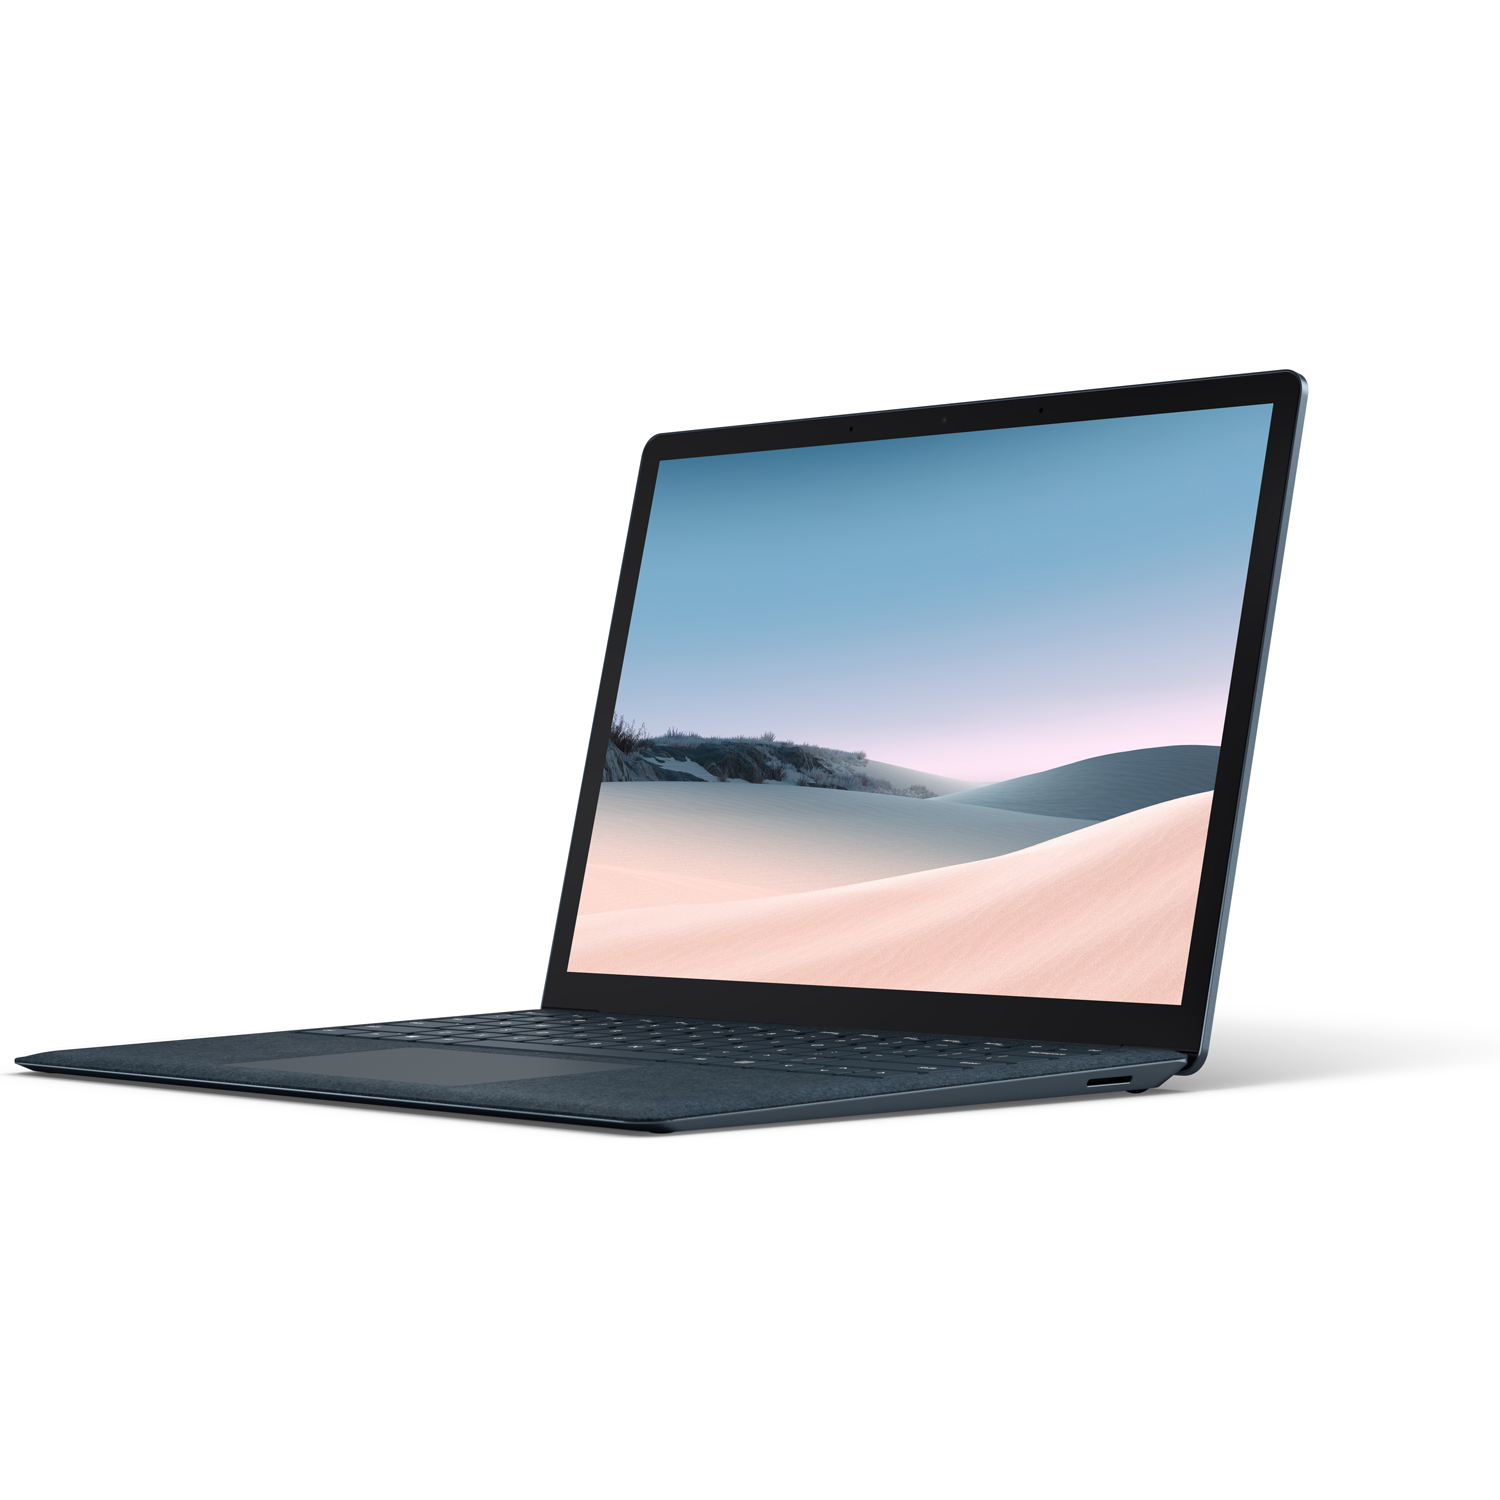 Microsoft V4C-00043 Surface Laptop 3 13.5 Touch Intel i5-1035G7 8GB 256GB, Cobalt Blue